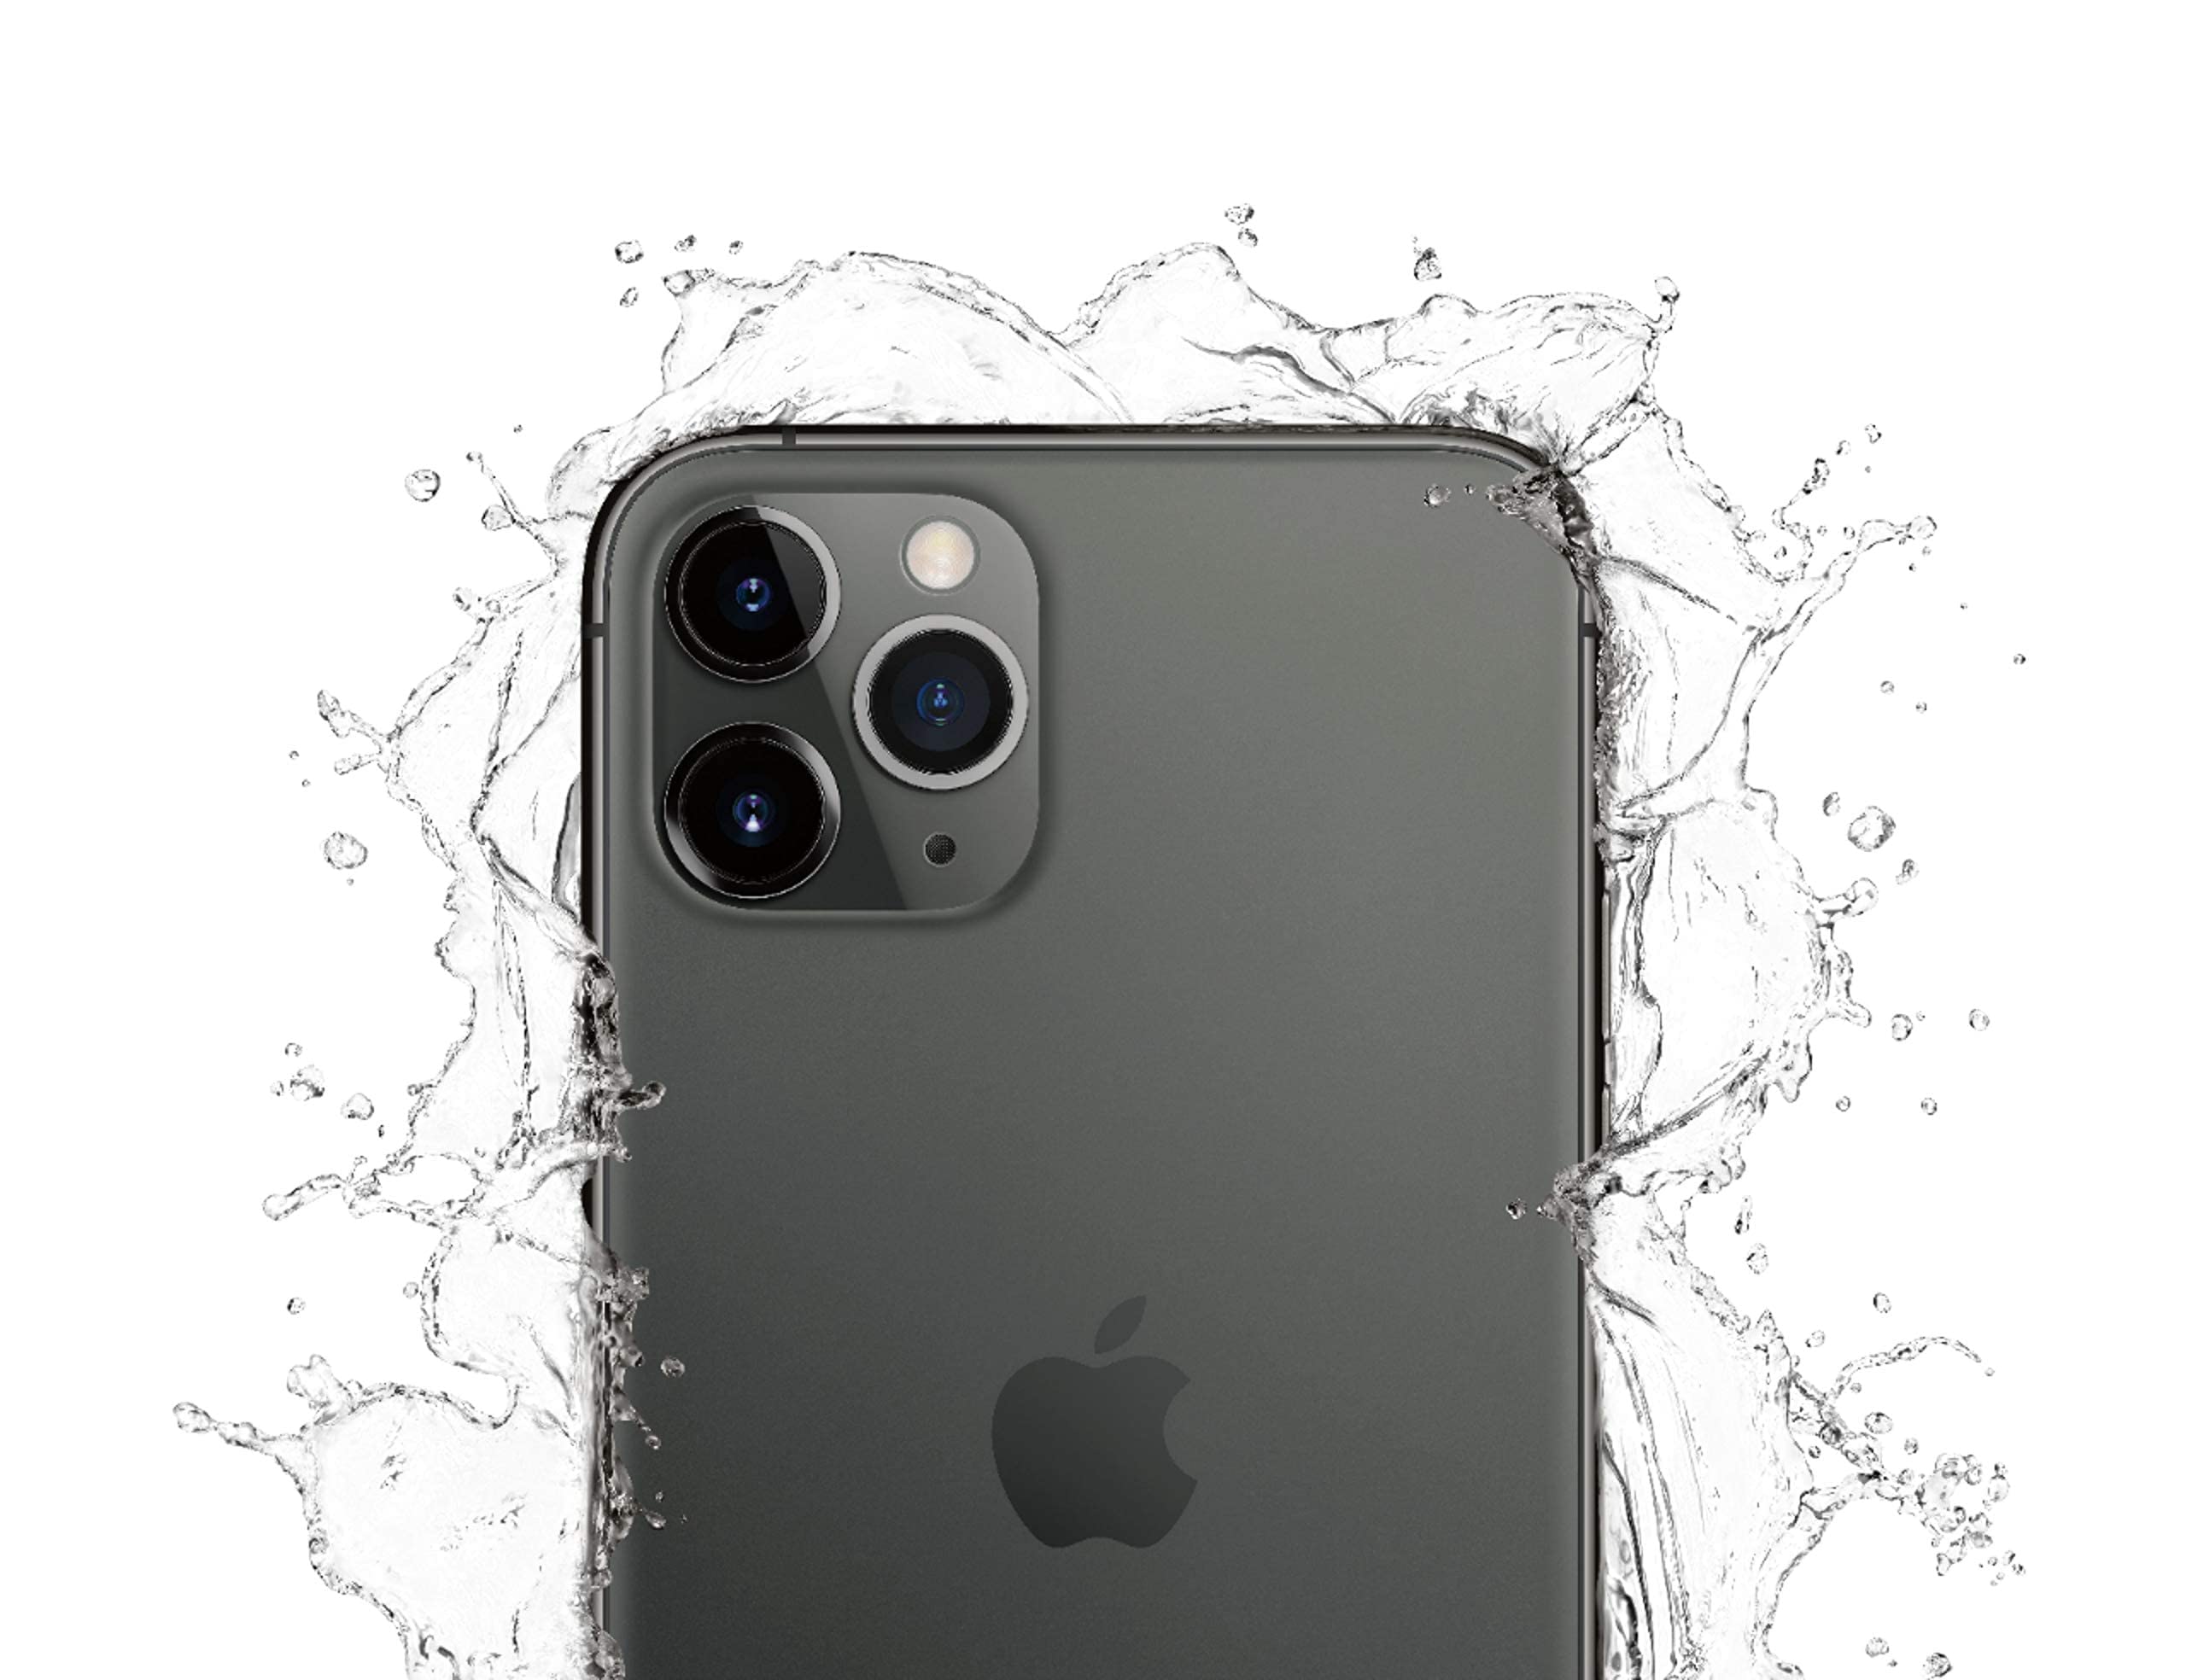 Apple iPhone 11 Pro Max, 512GB, Space Gray - Unlocked (Renewed Premium)